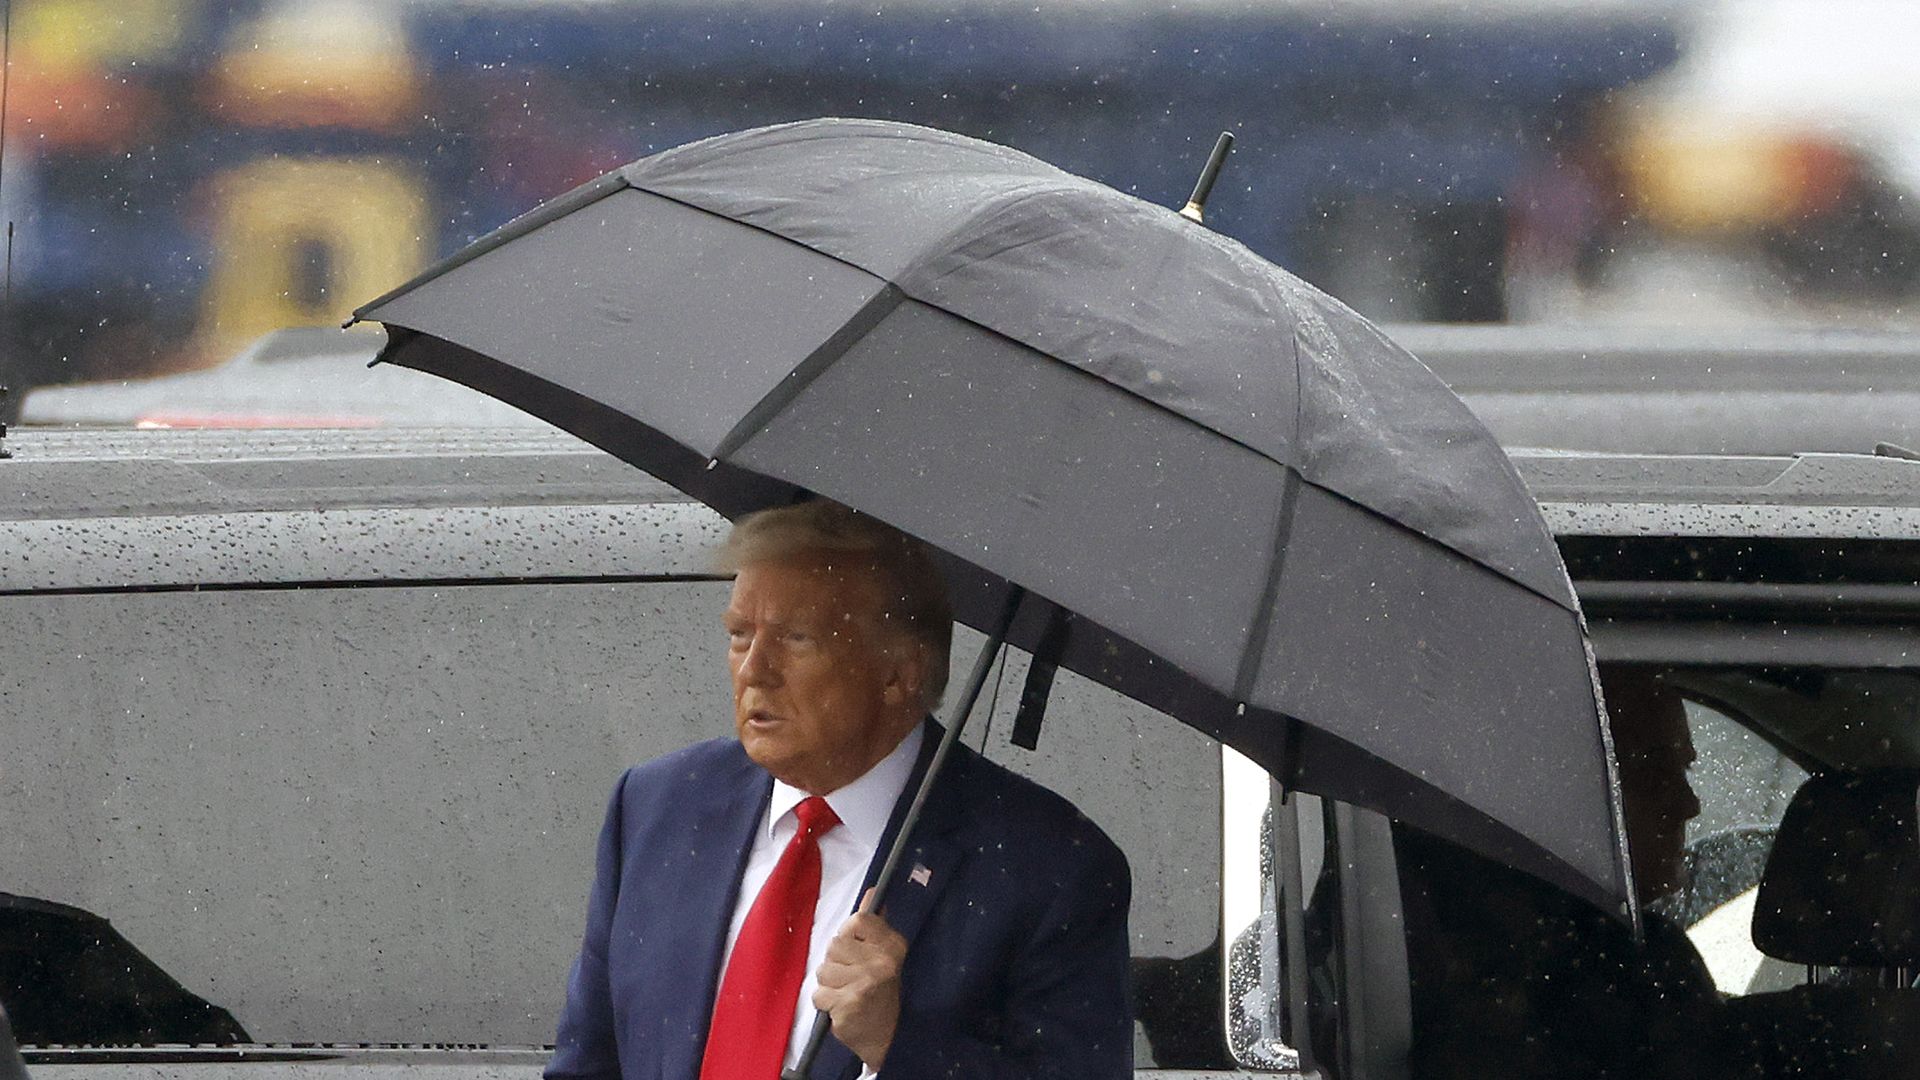 Trump with an umbrella